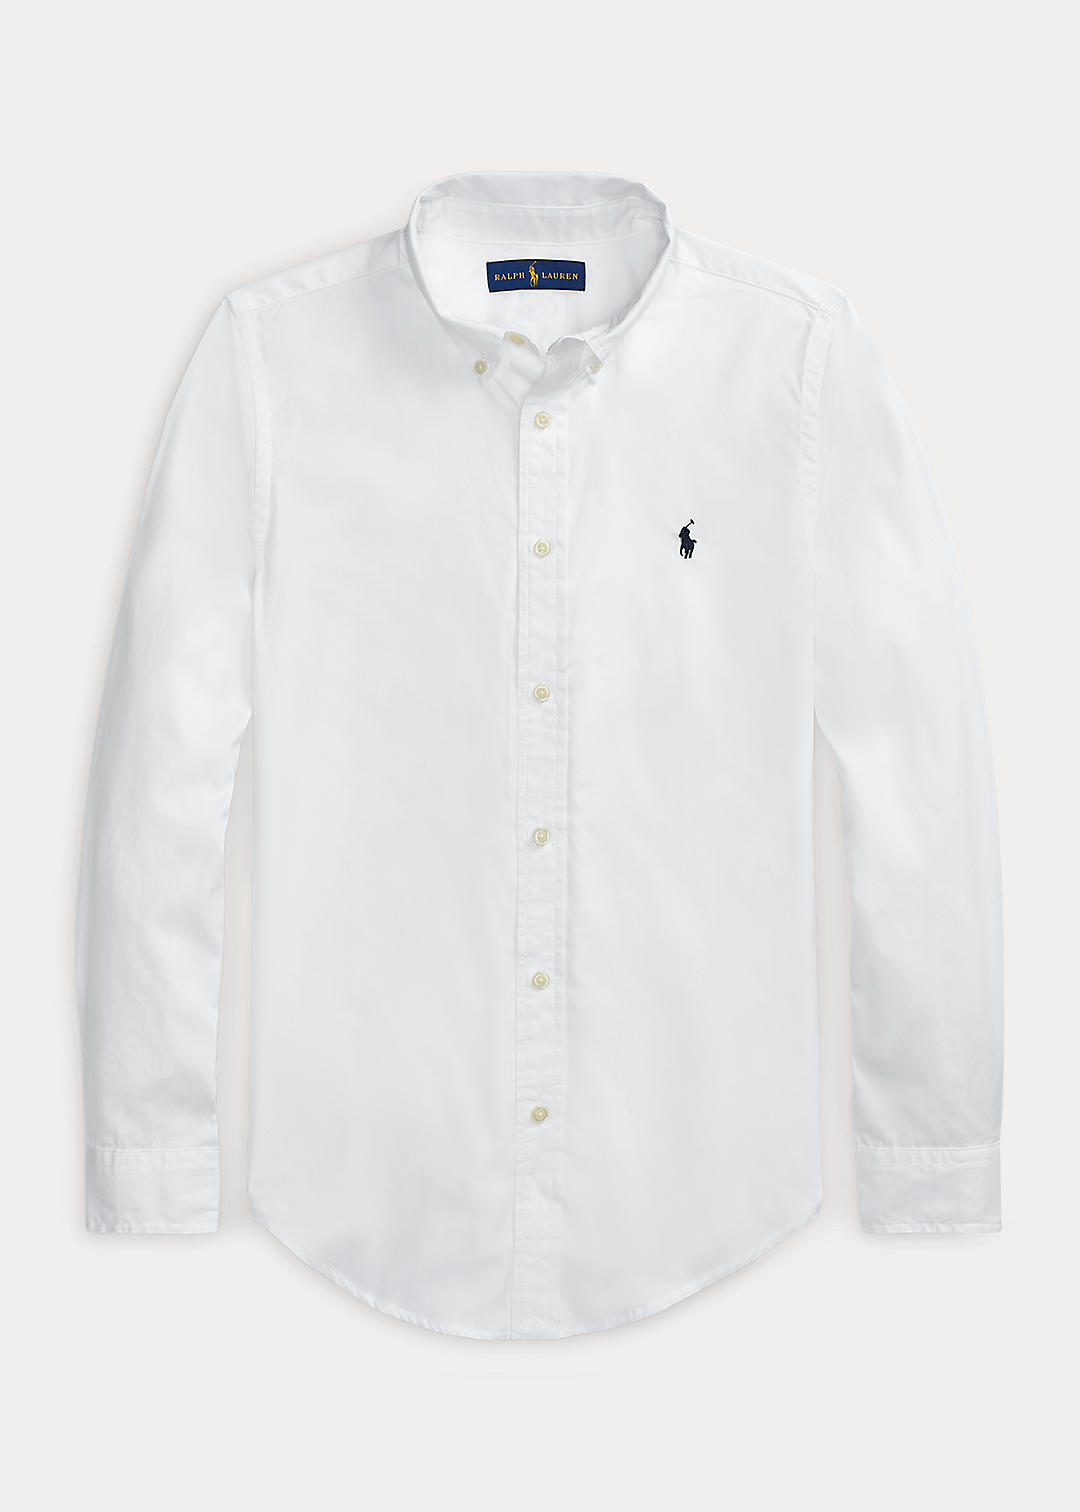 Boys 8-18 Custom Fit Oxford Shirt 1